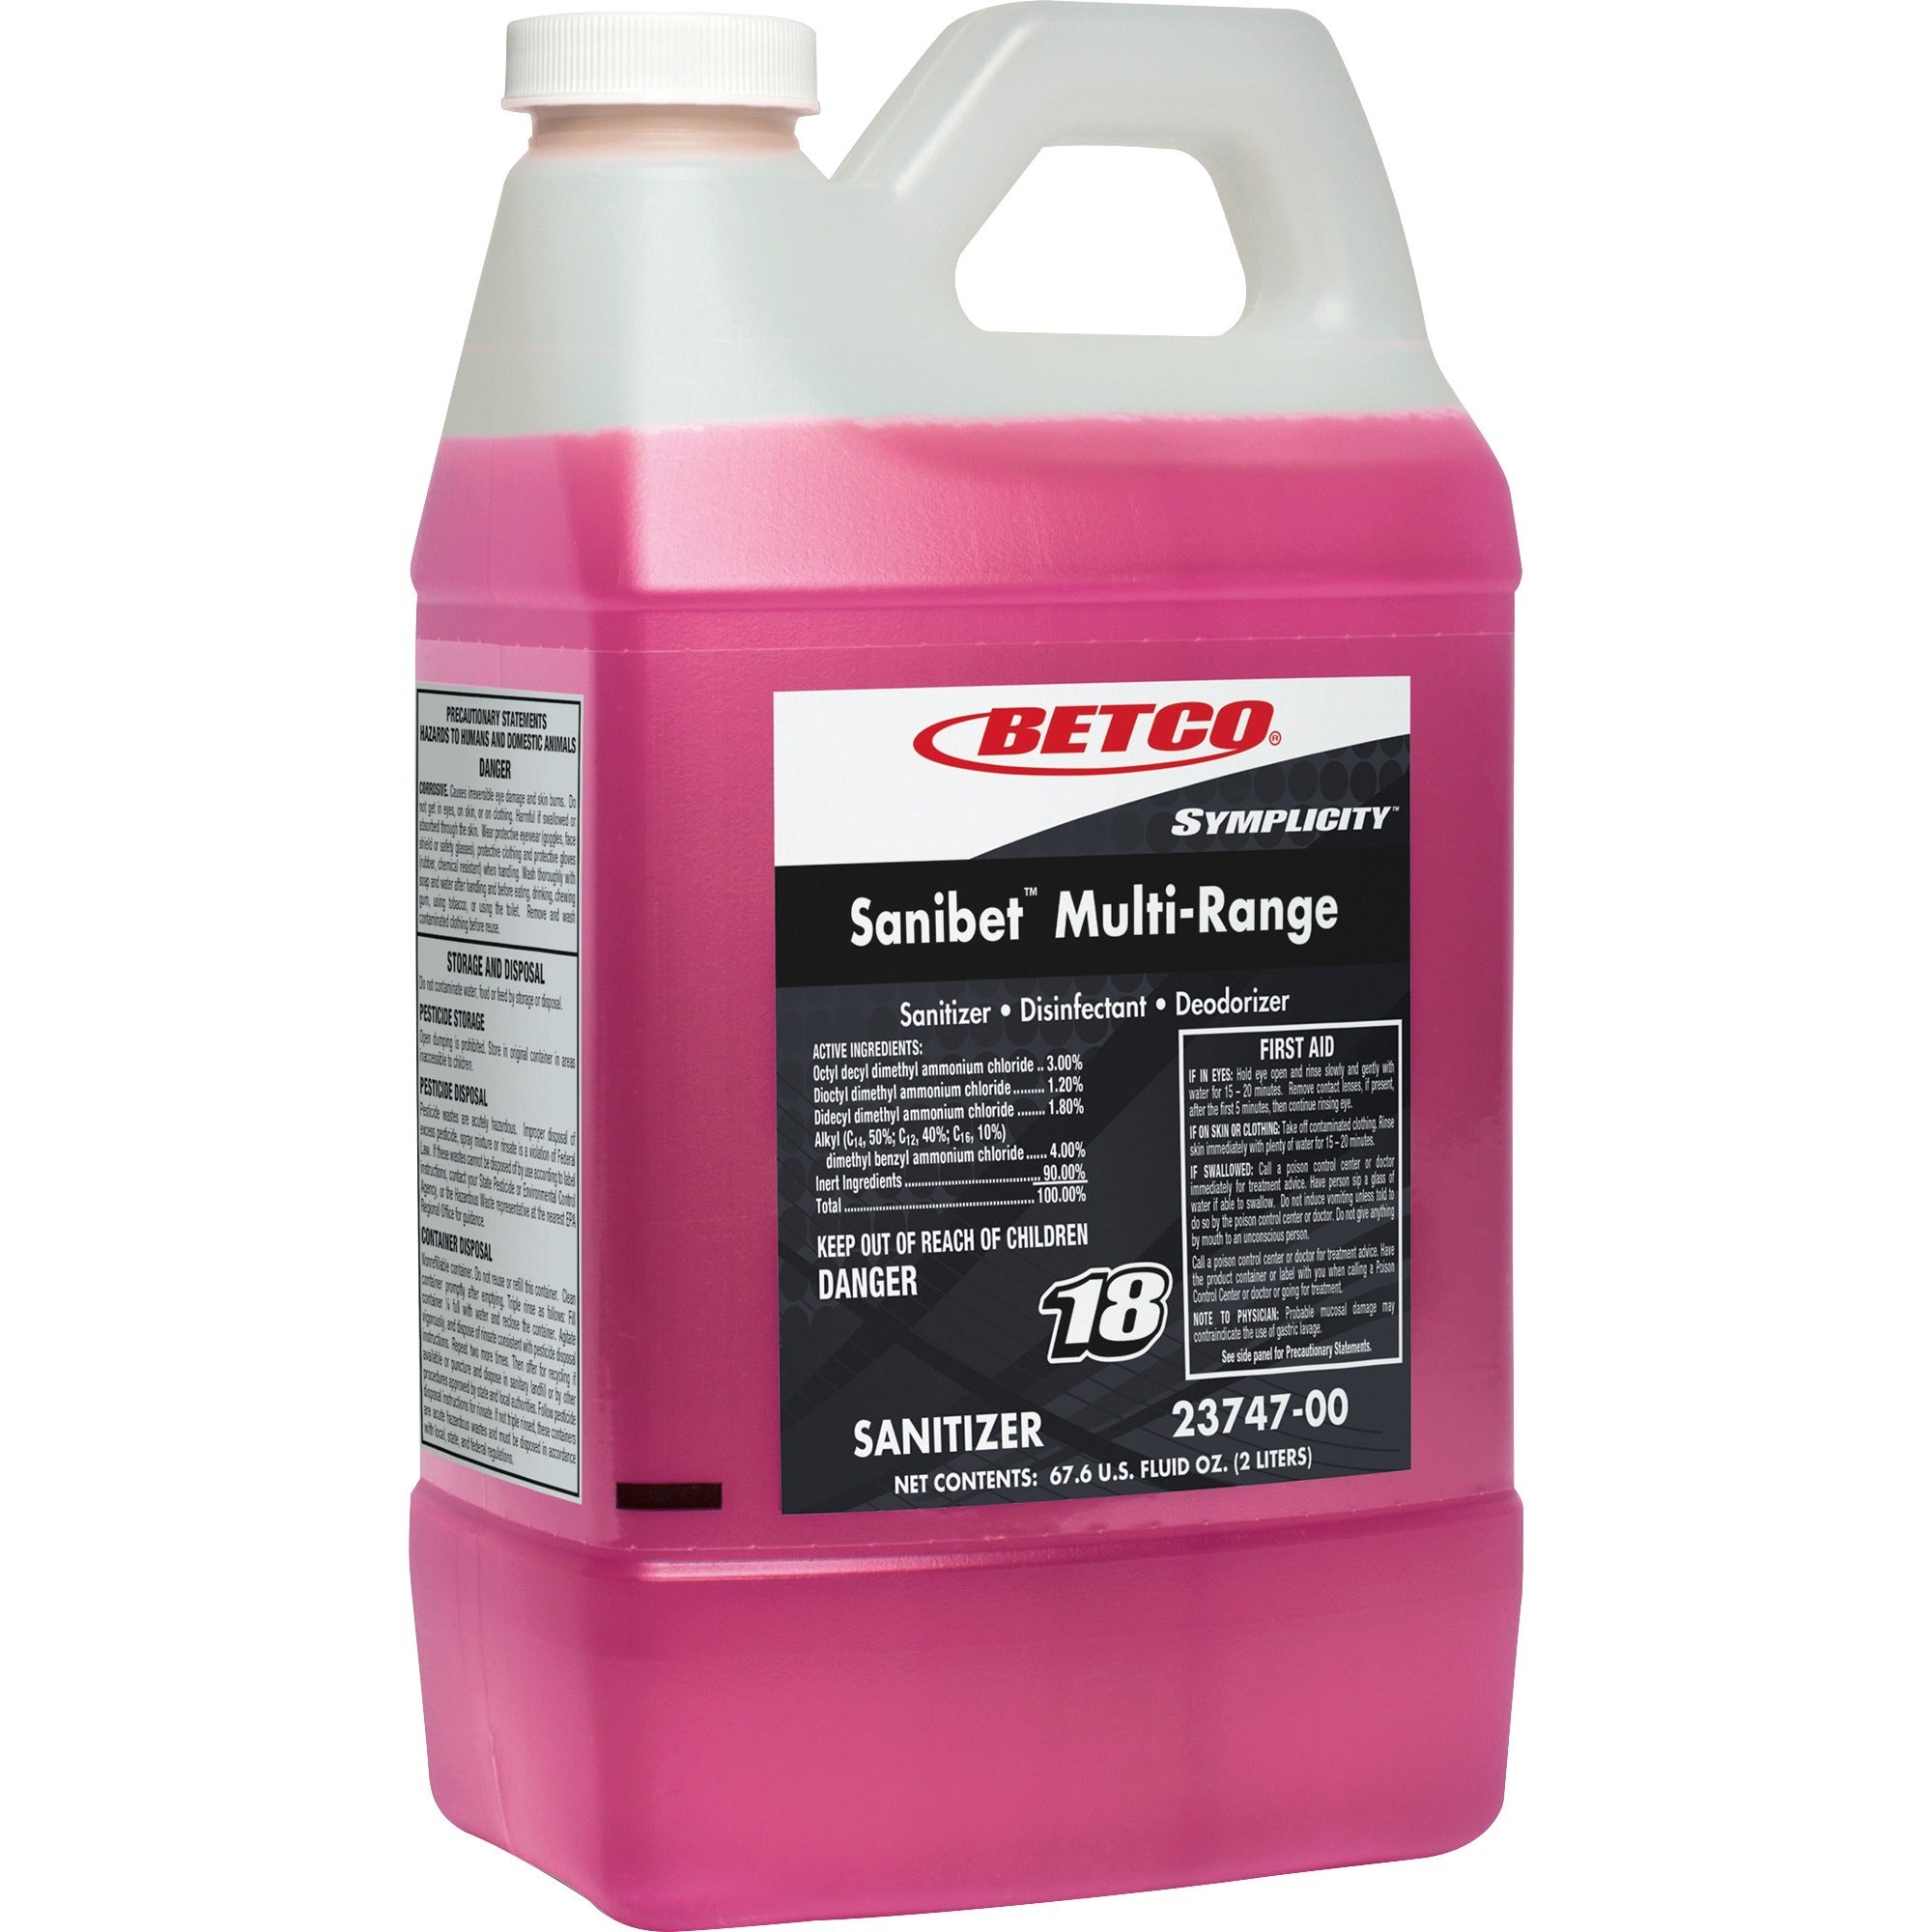 Betco Symplicity Sanibet Multi-Range Sanitizer - FASTDRAW 18 - Concentrate - 67.6 fl oz (2.1 quart) - 4 / Carton - Rinse-free, Versatile, Disinfectant - Pink - 2